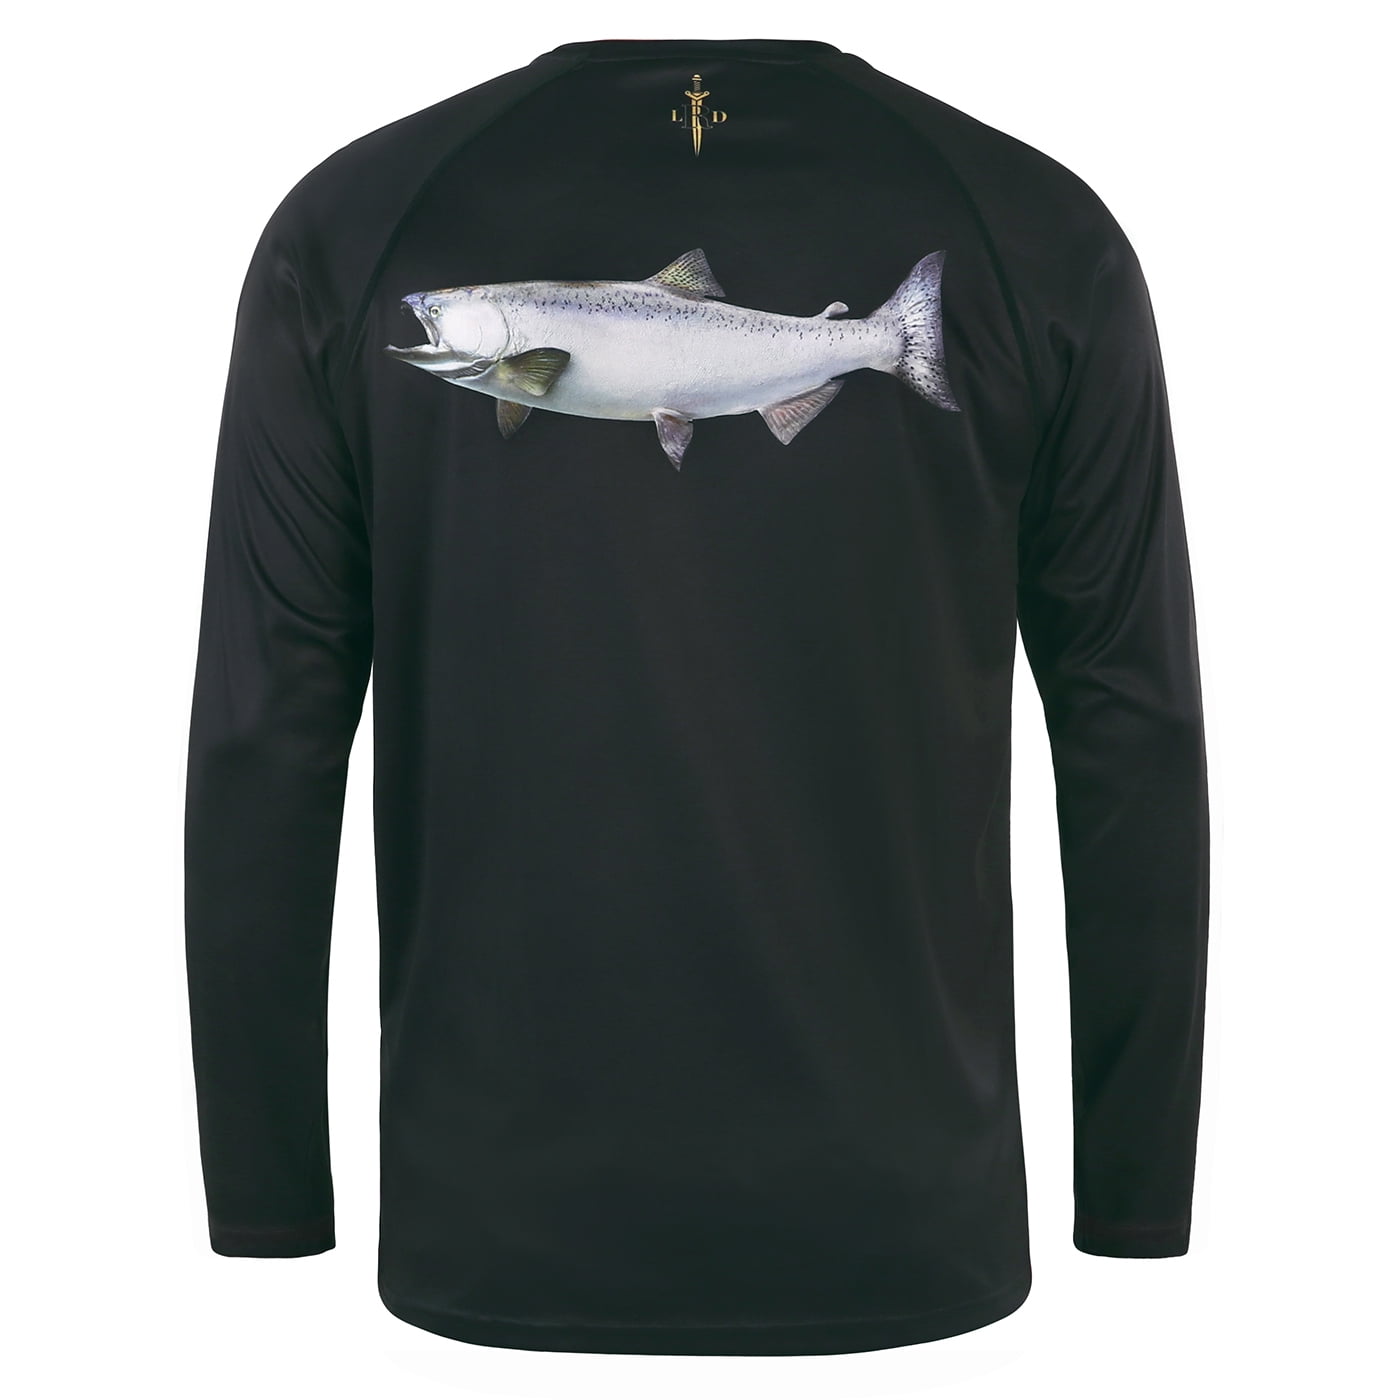 Men's Long Sleeve Carolina Blue USA UPF 50 Microfiber Performance Fishing Shirt 